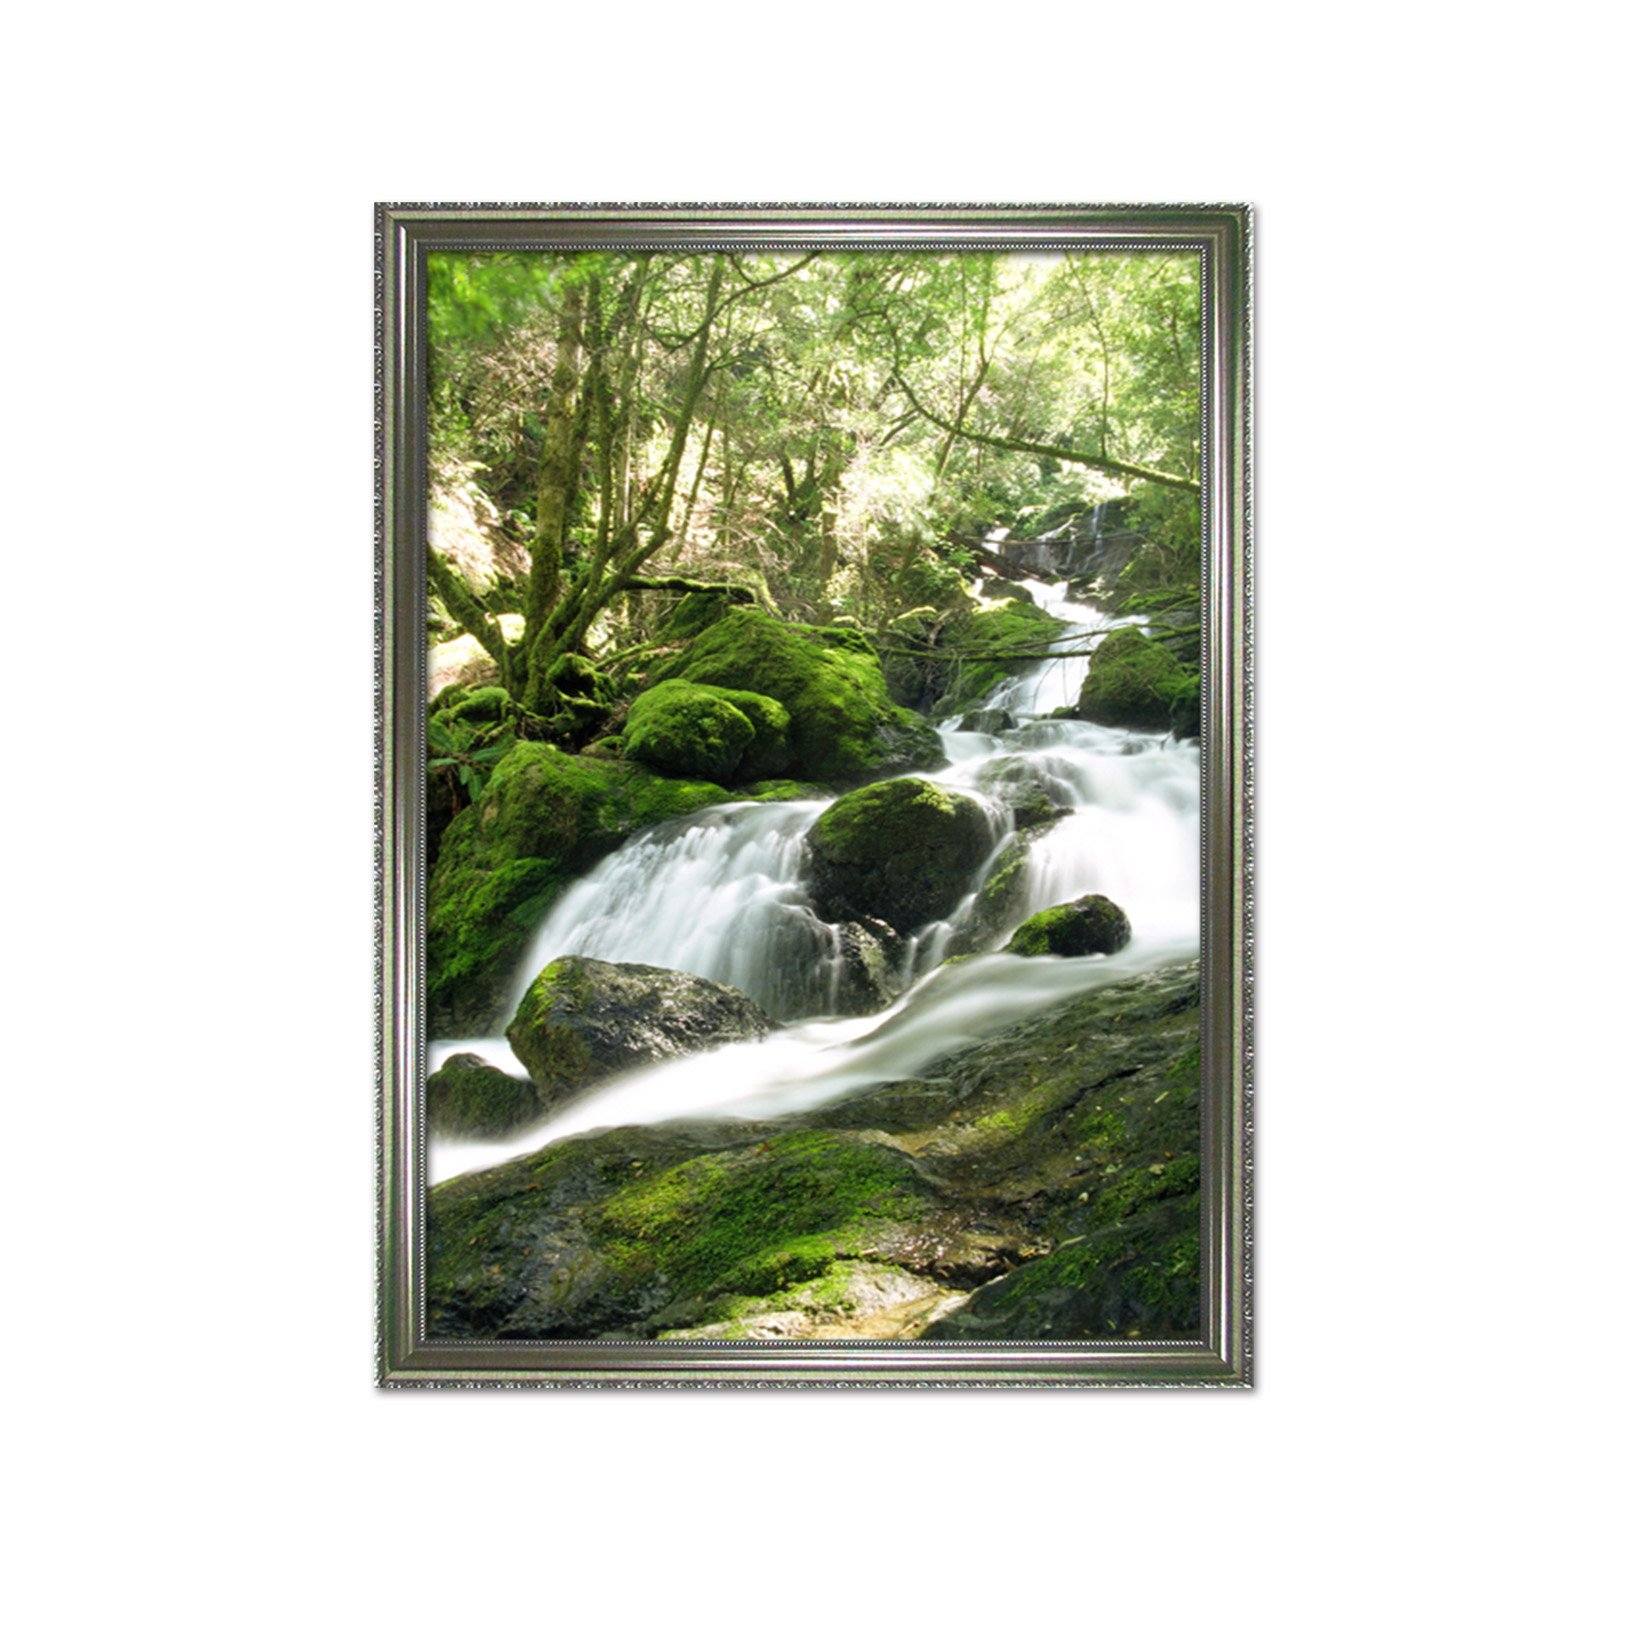 3D Moss River 062 Fake Framed Print Painting Wallpaper AJ Creativity Home 